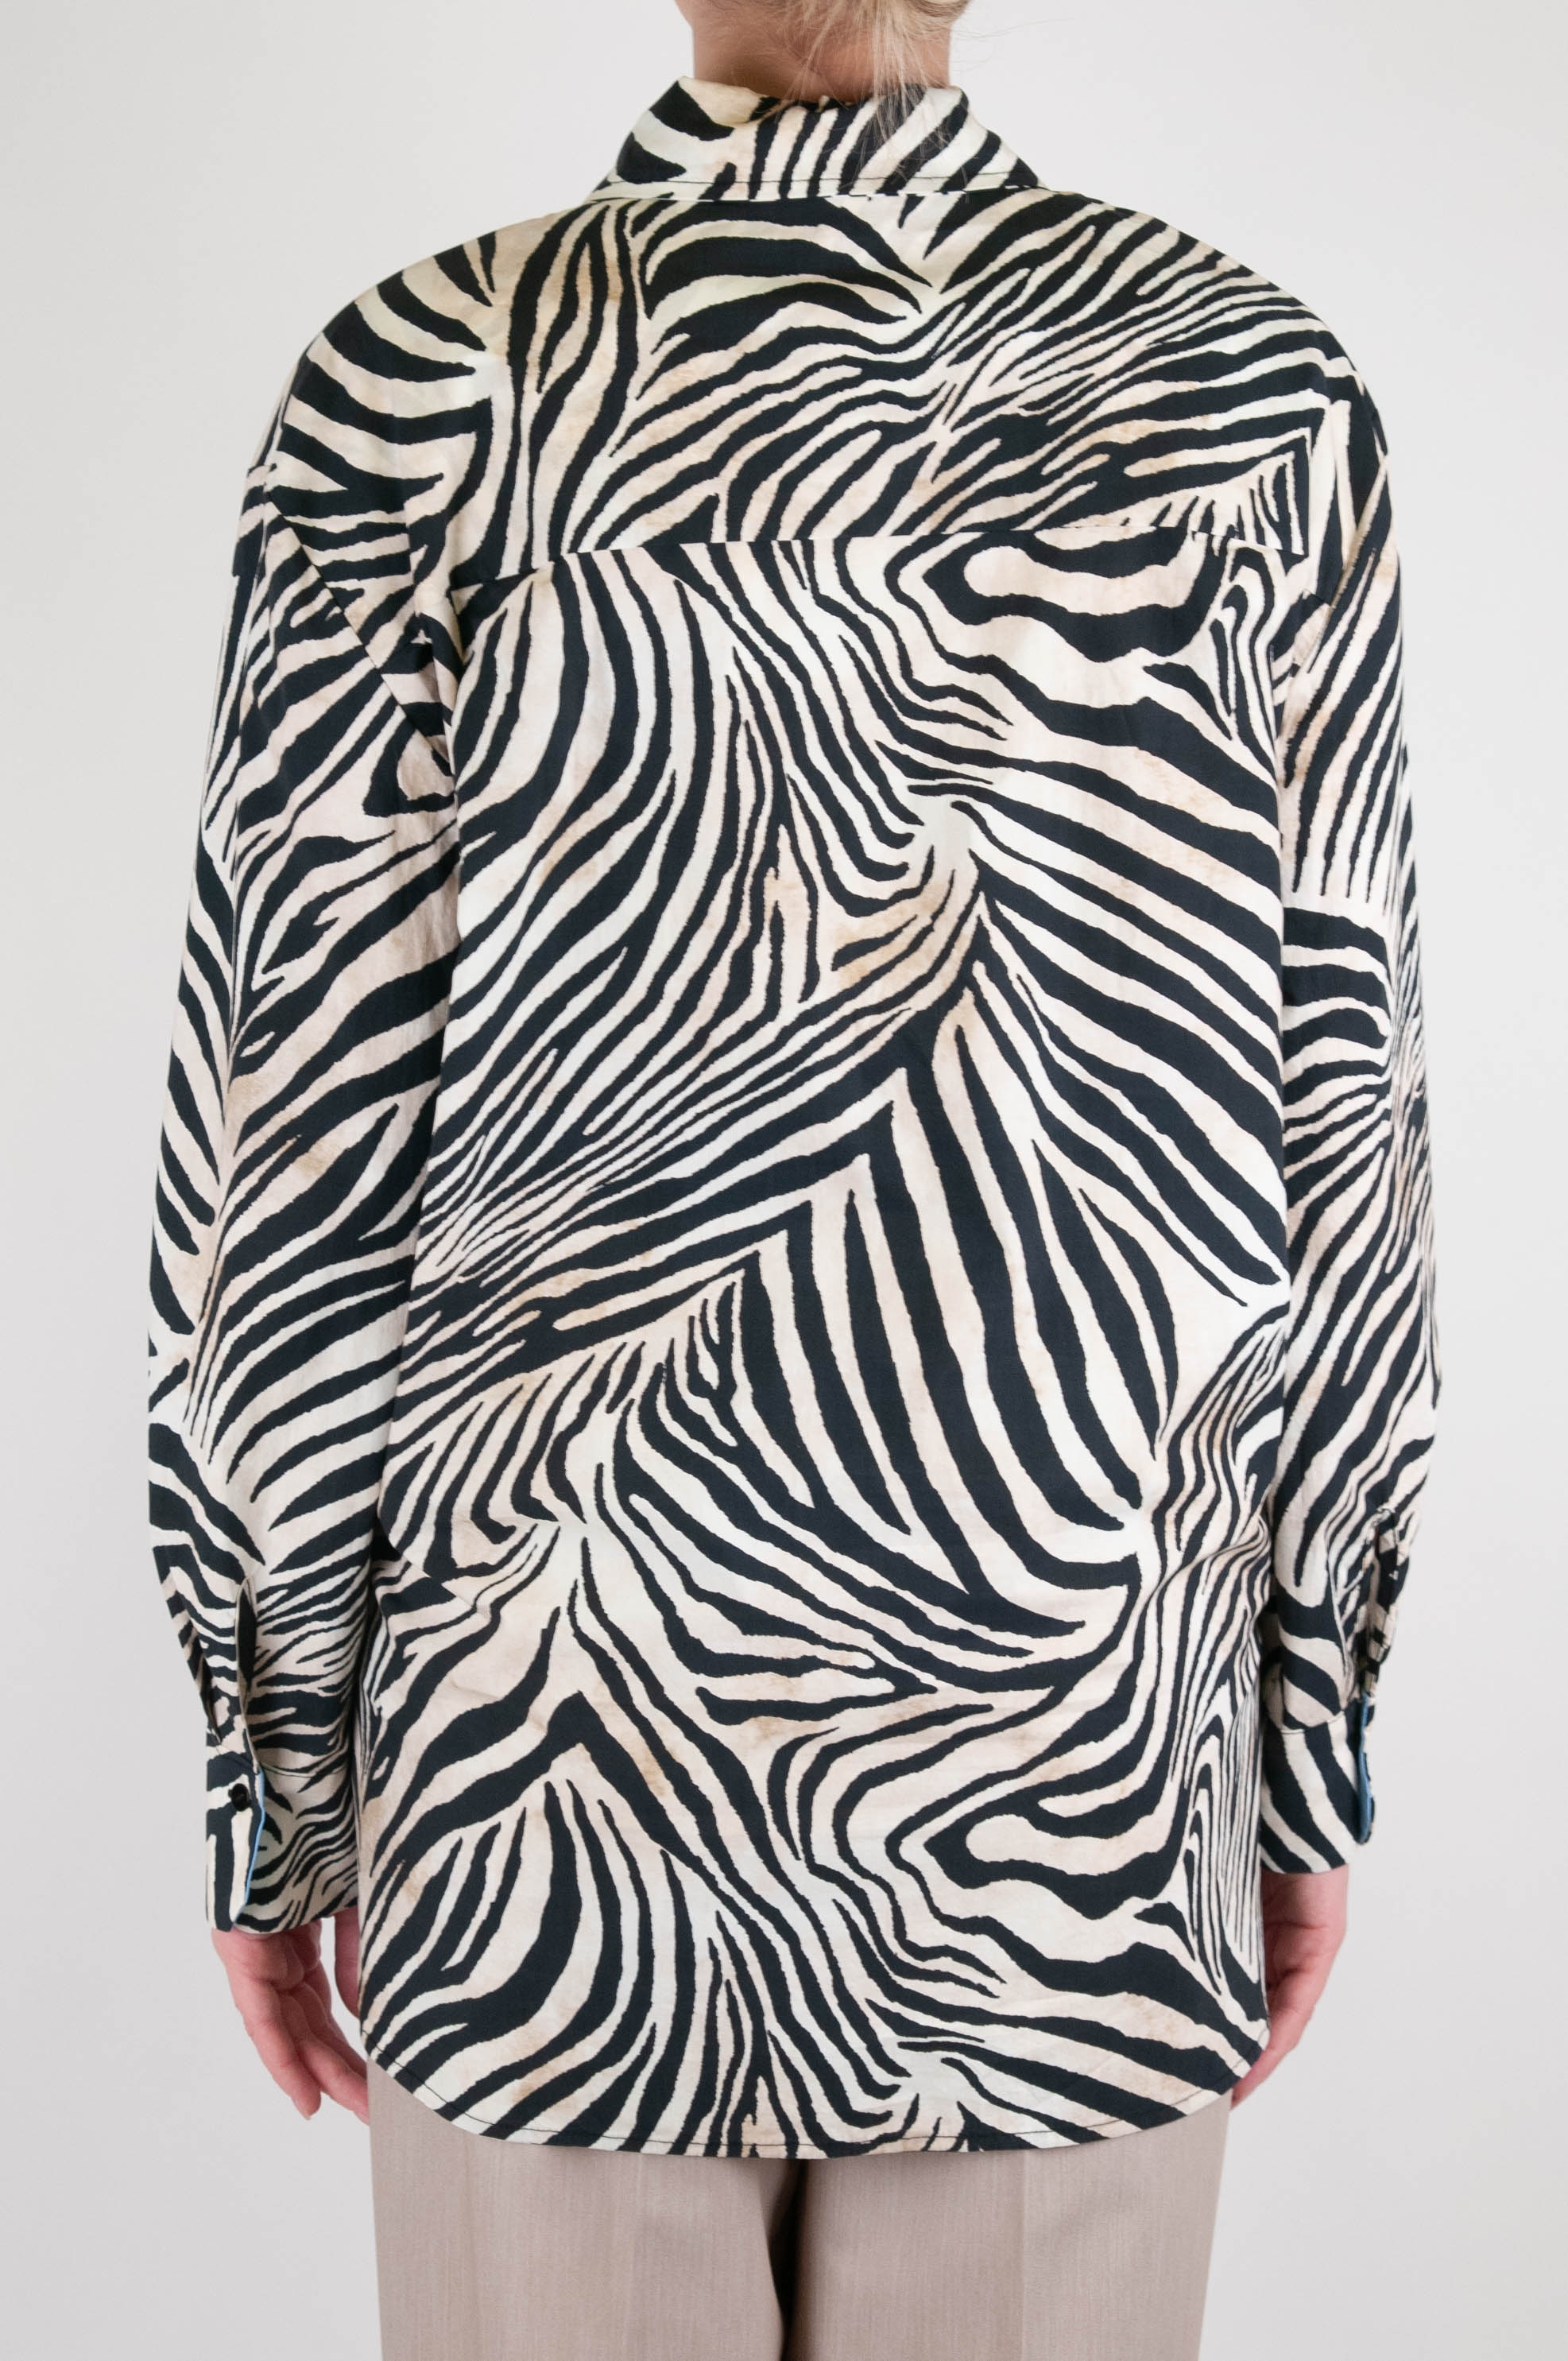 Tension in - Zebra animalier patterned shirt